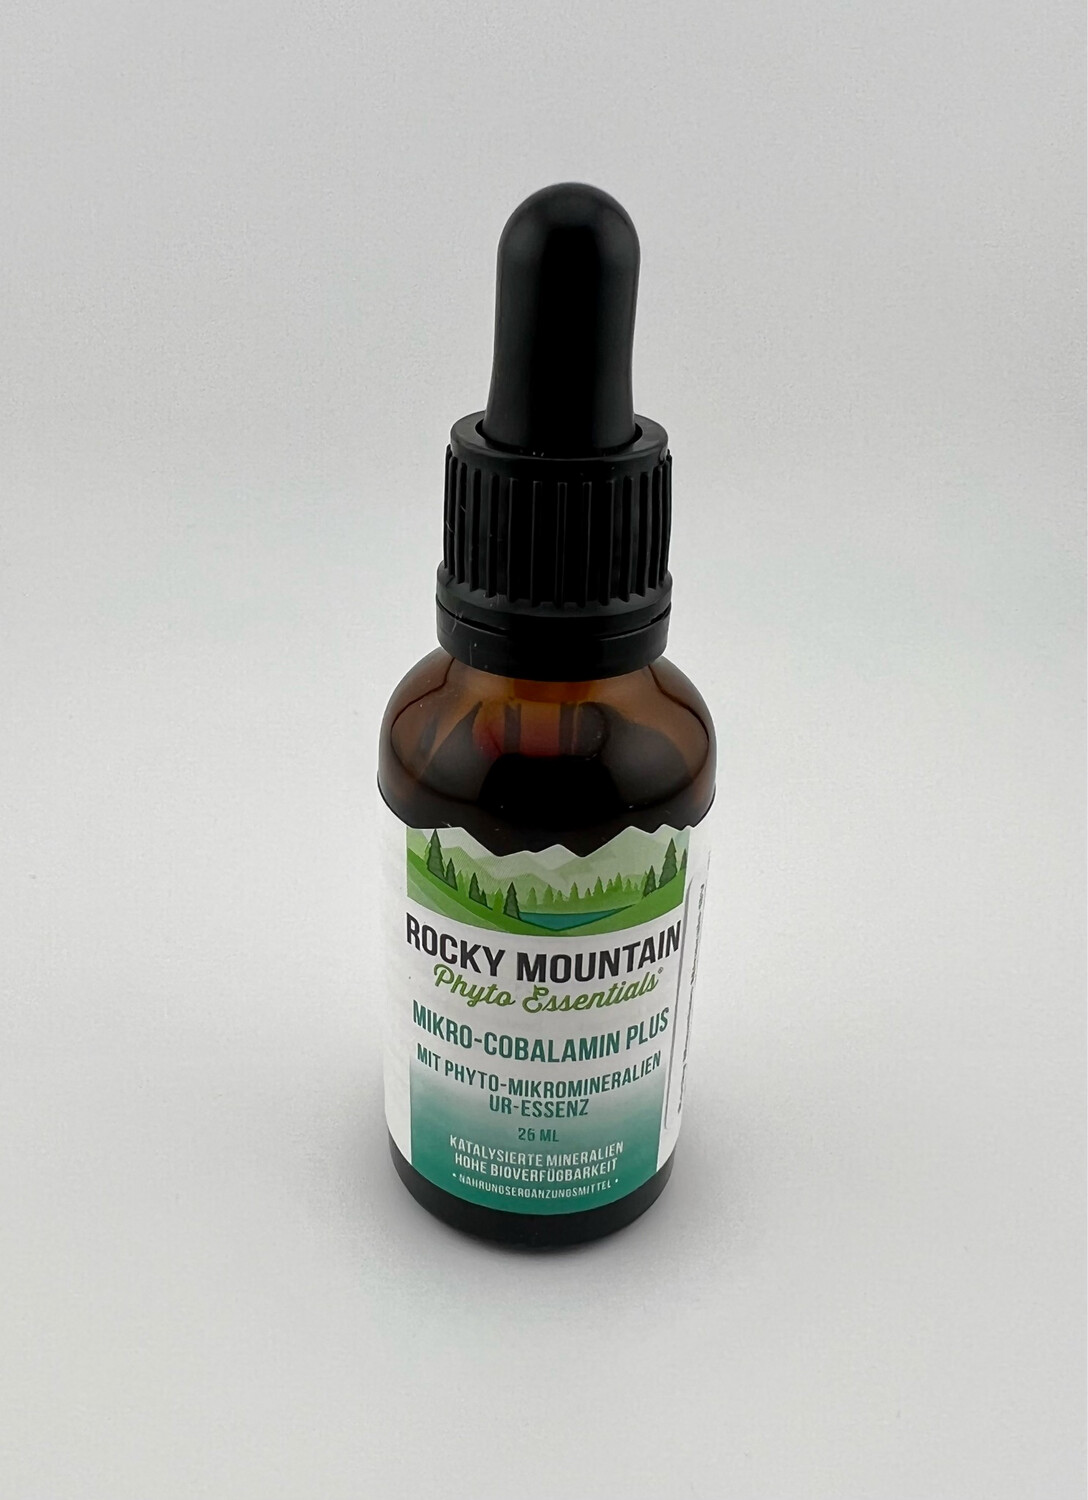 Rocky Mountain Mikro-Cobalamin Plus (25 ML) Vitamin B12